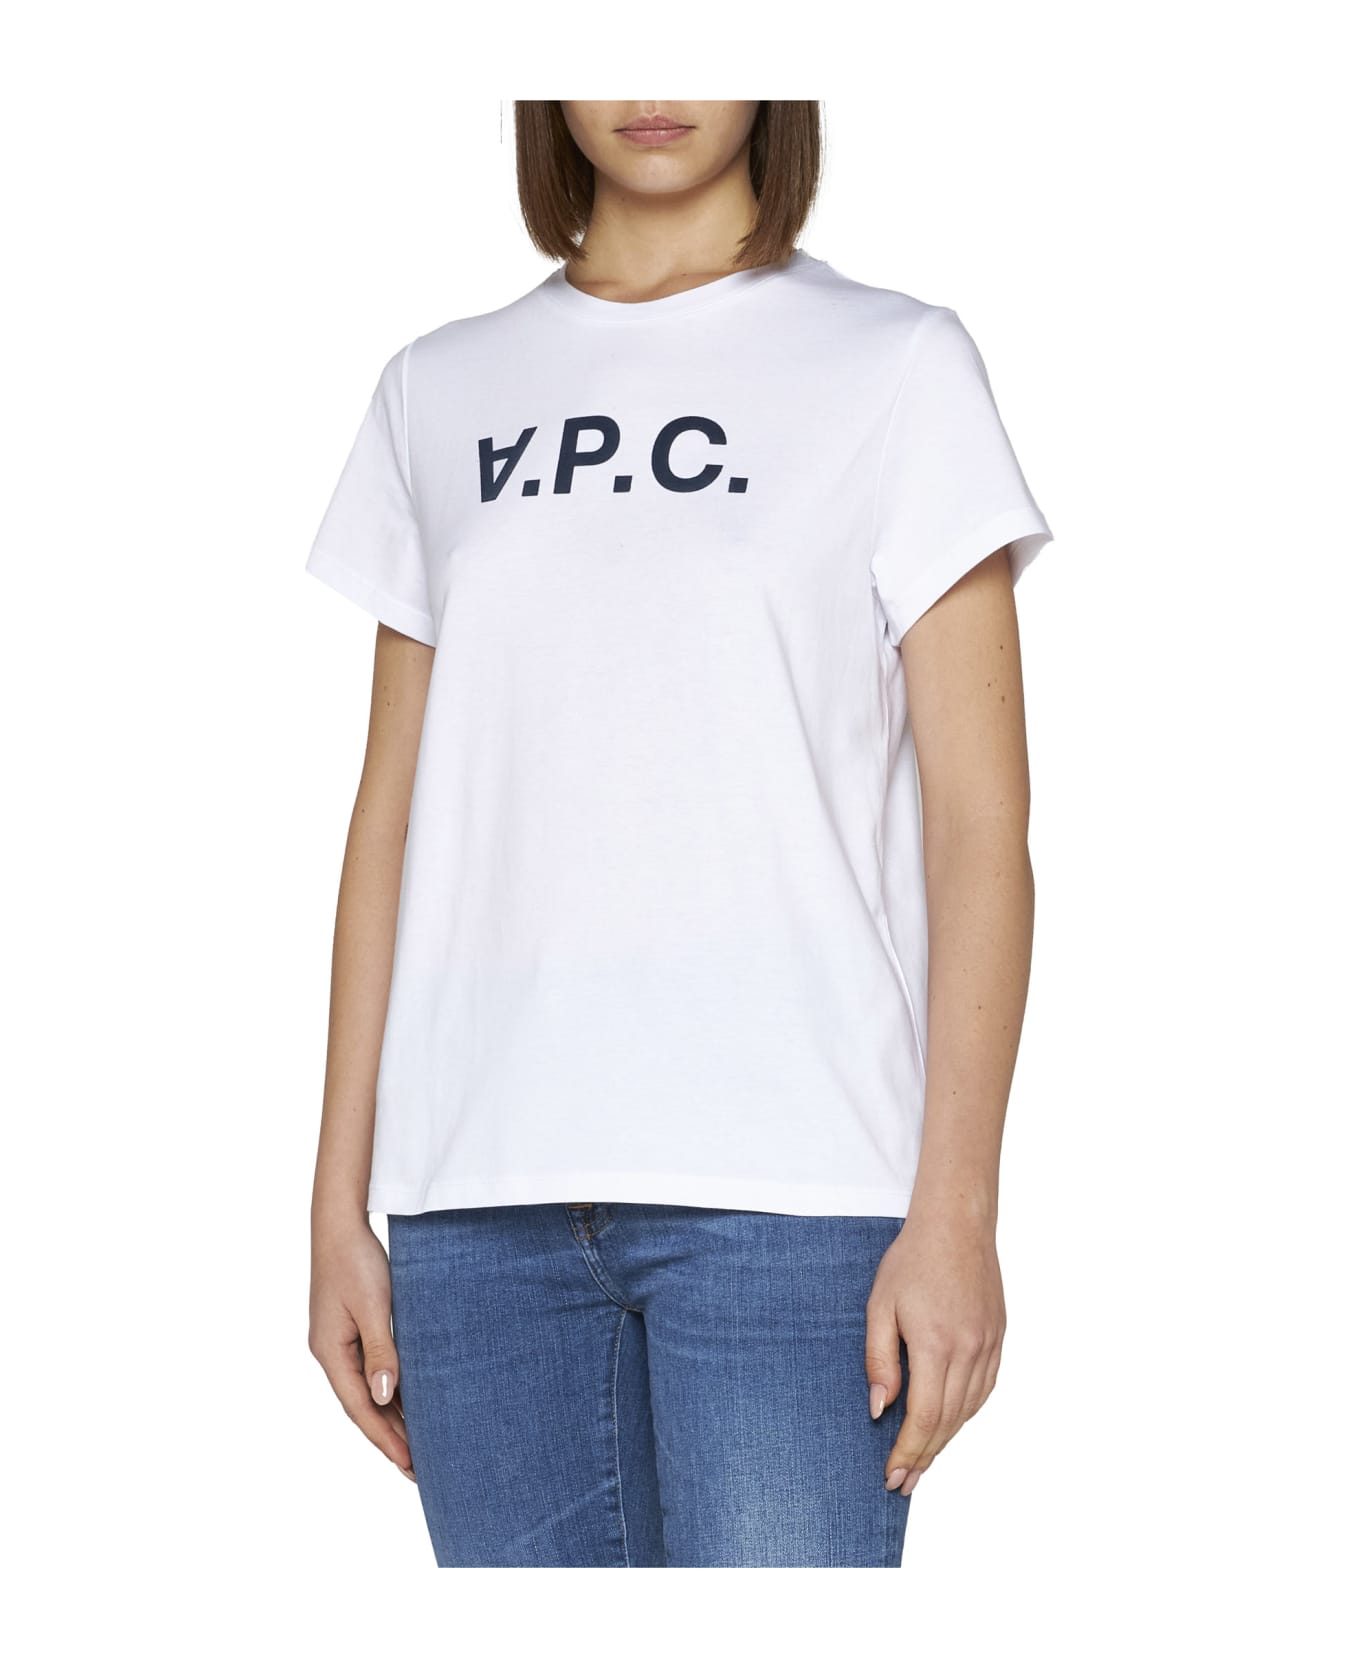 A.P.C. Logo T-shirt - Blue